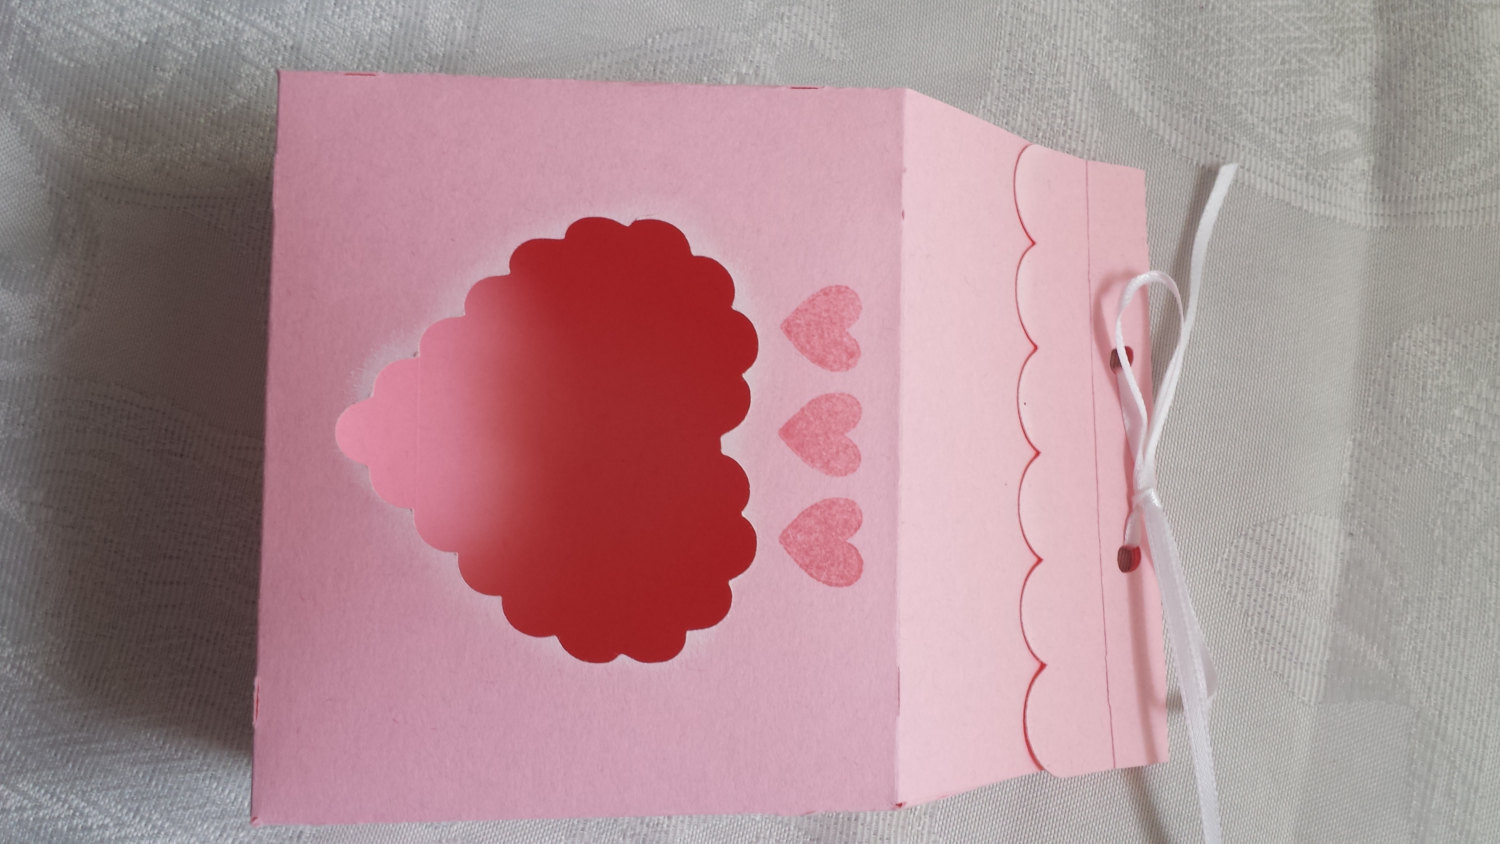 Valentine Gift Box Ideas
 18 Cute Little Gift Box Ideas for Valentine s Day